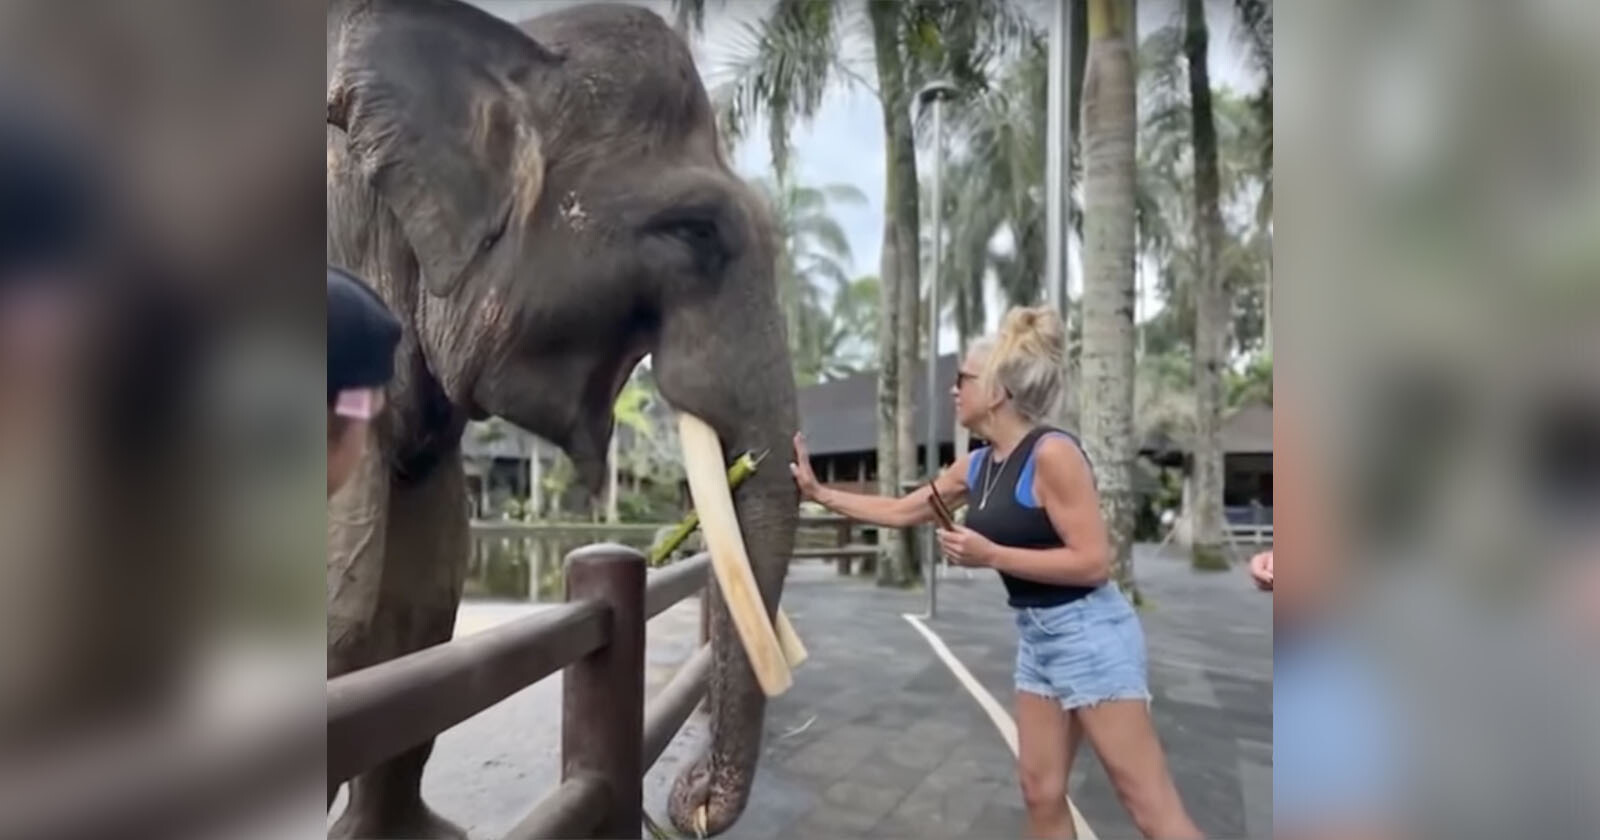  woman arm severely broken elephant while posing 